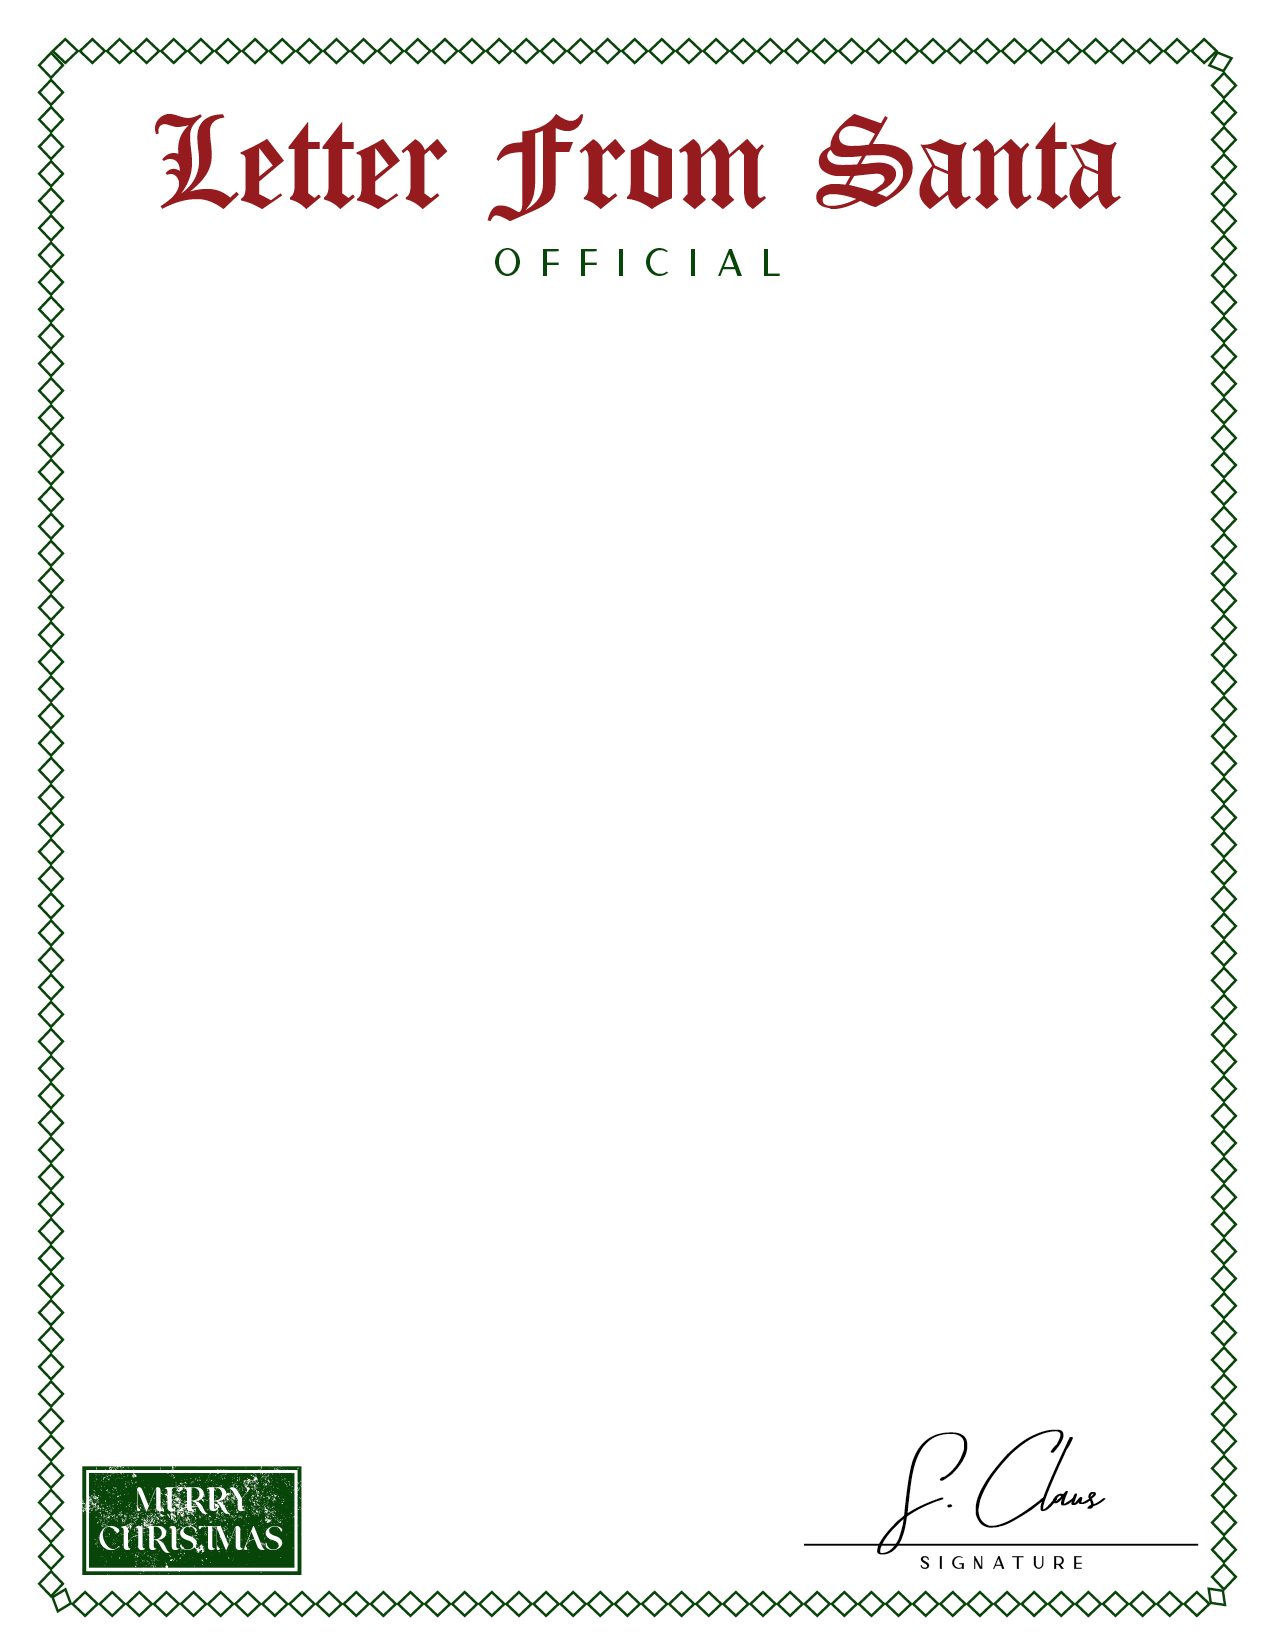 santa-letterhead-free-printable-printable-templates